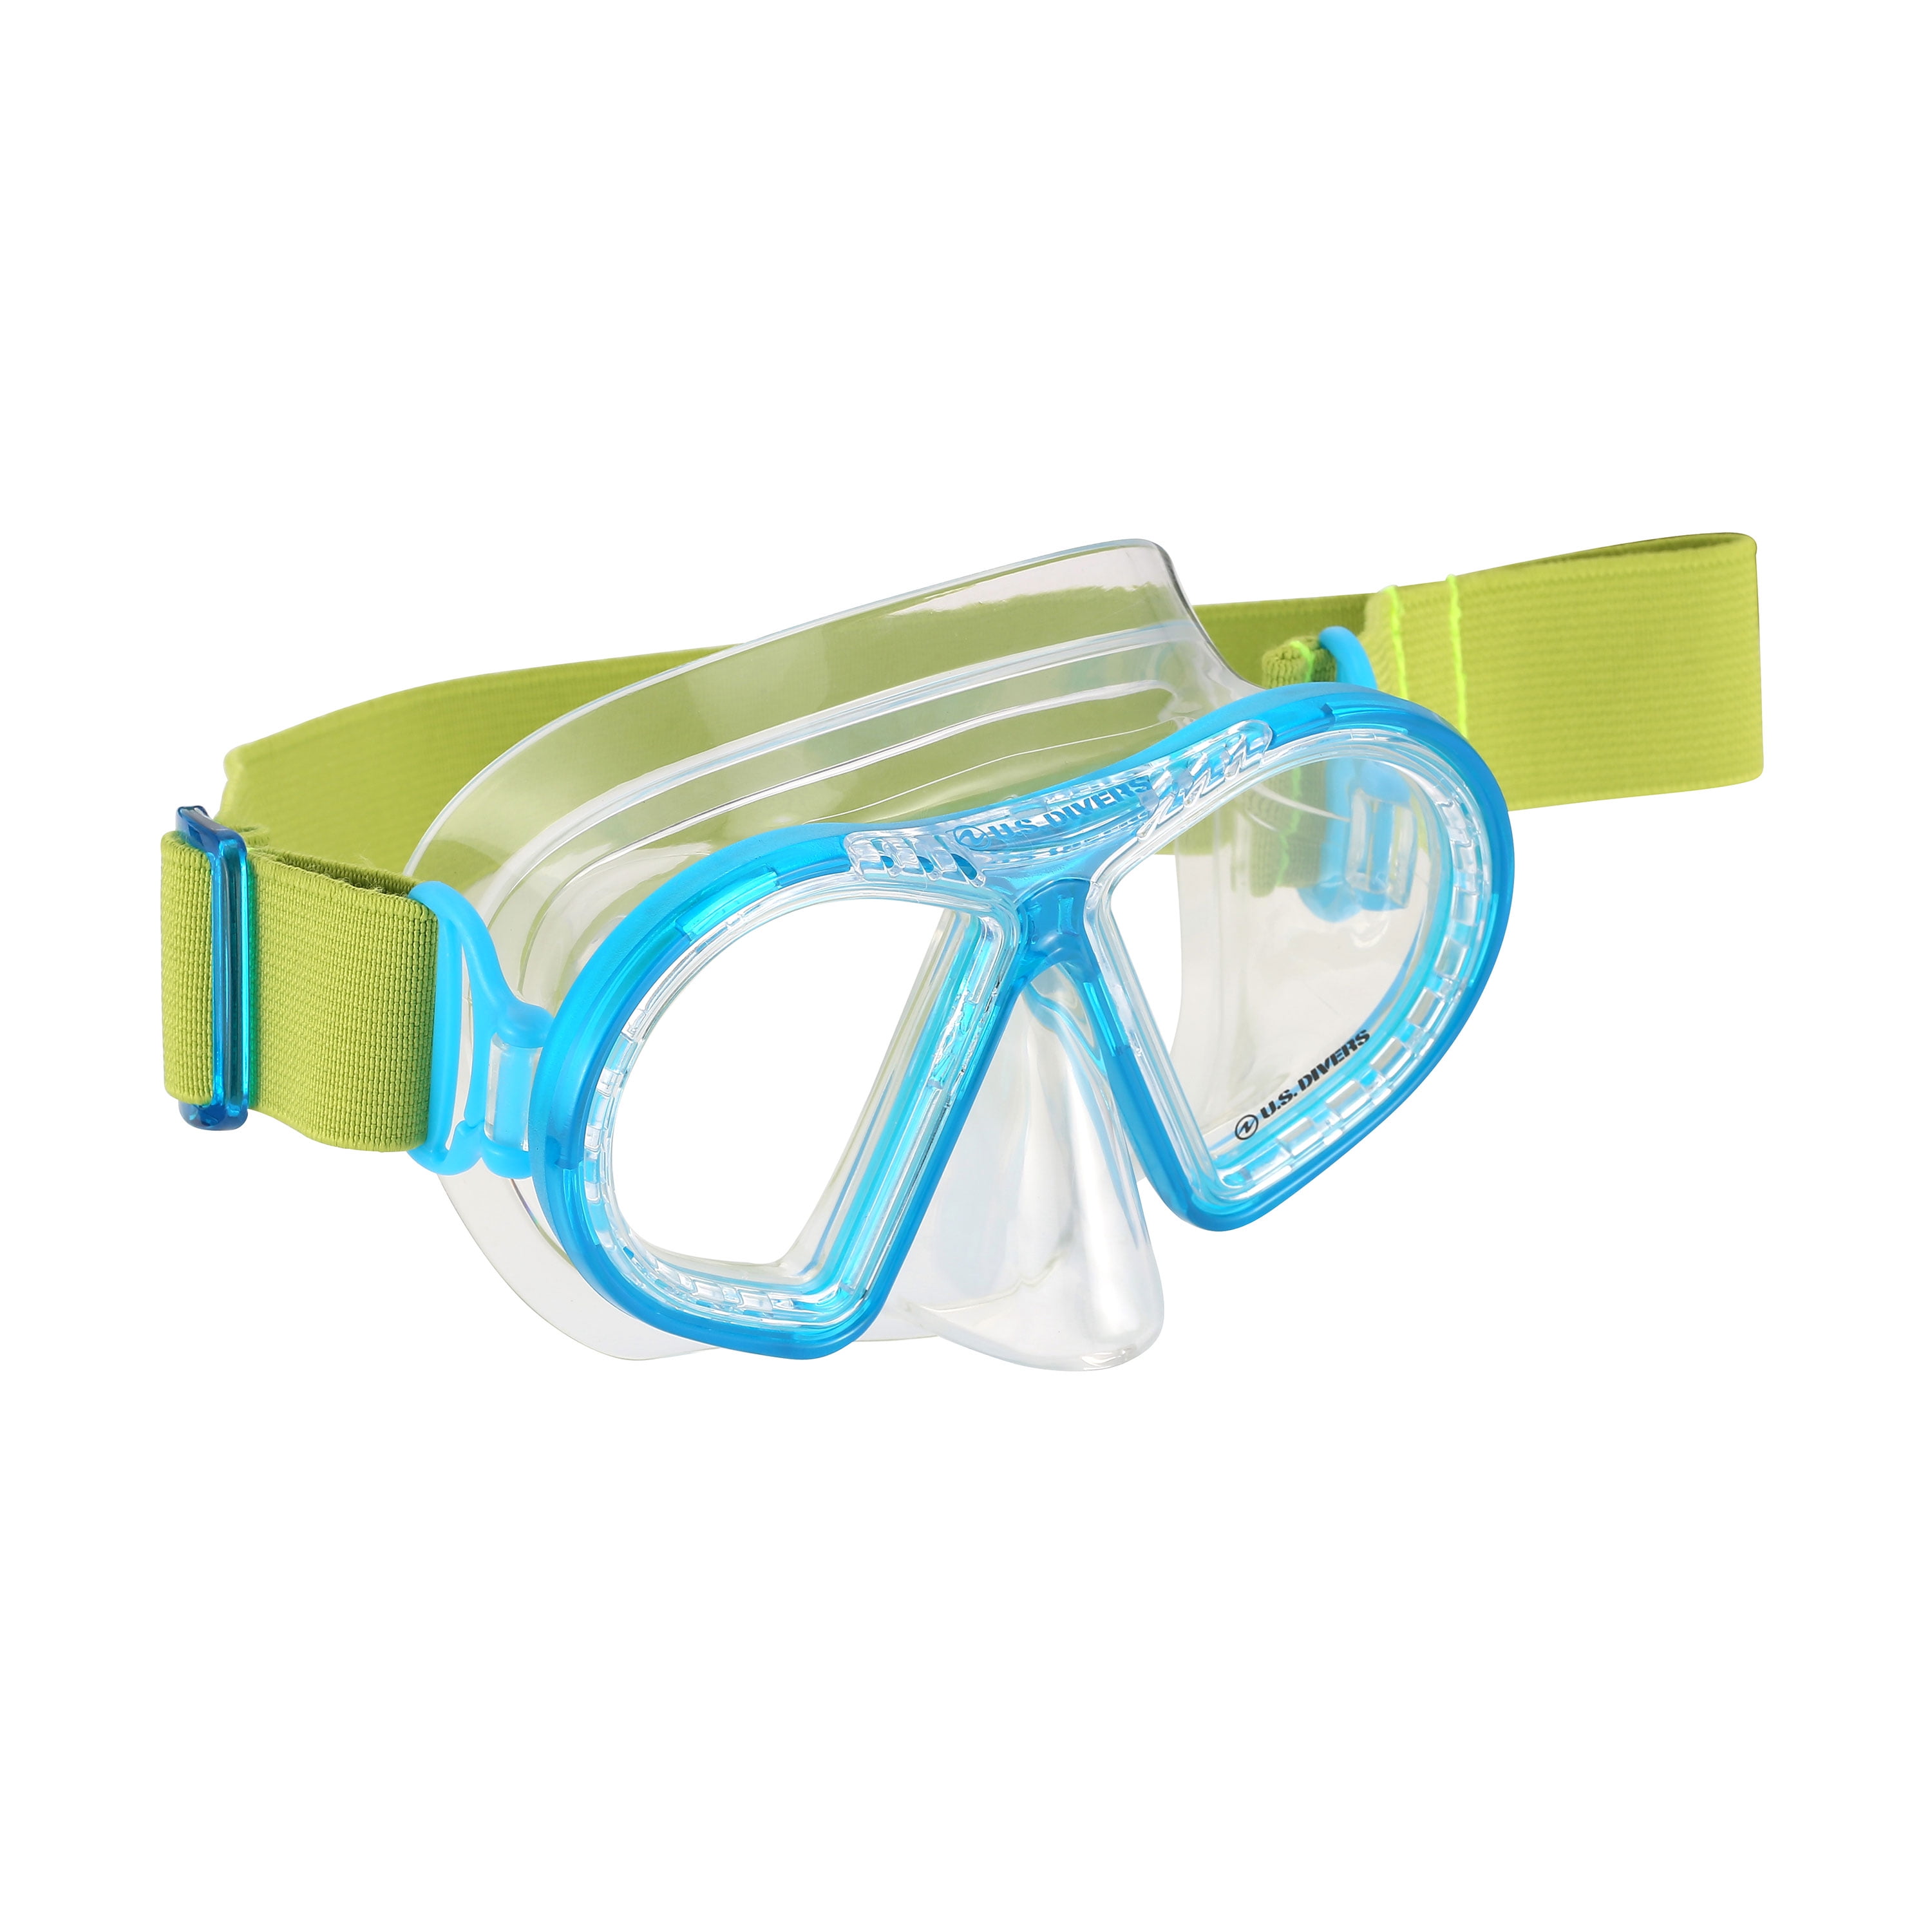 U.S. Divers Toucan Jr Mask Adjust Fabric 6+ Strap (Blue) Kids Snorkeling Easy Ages